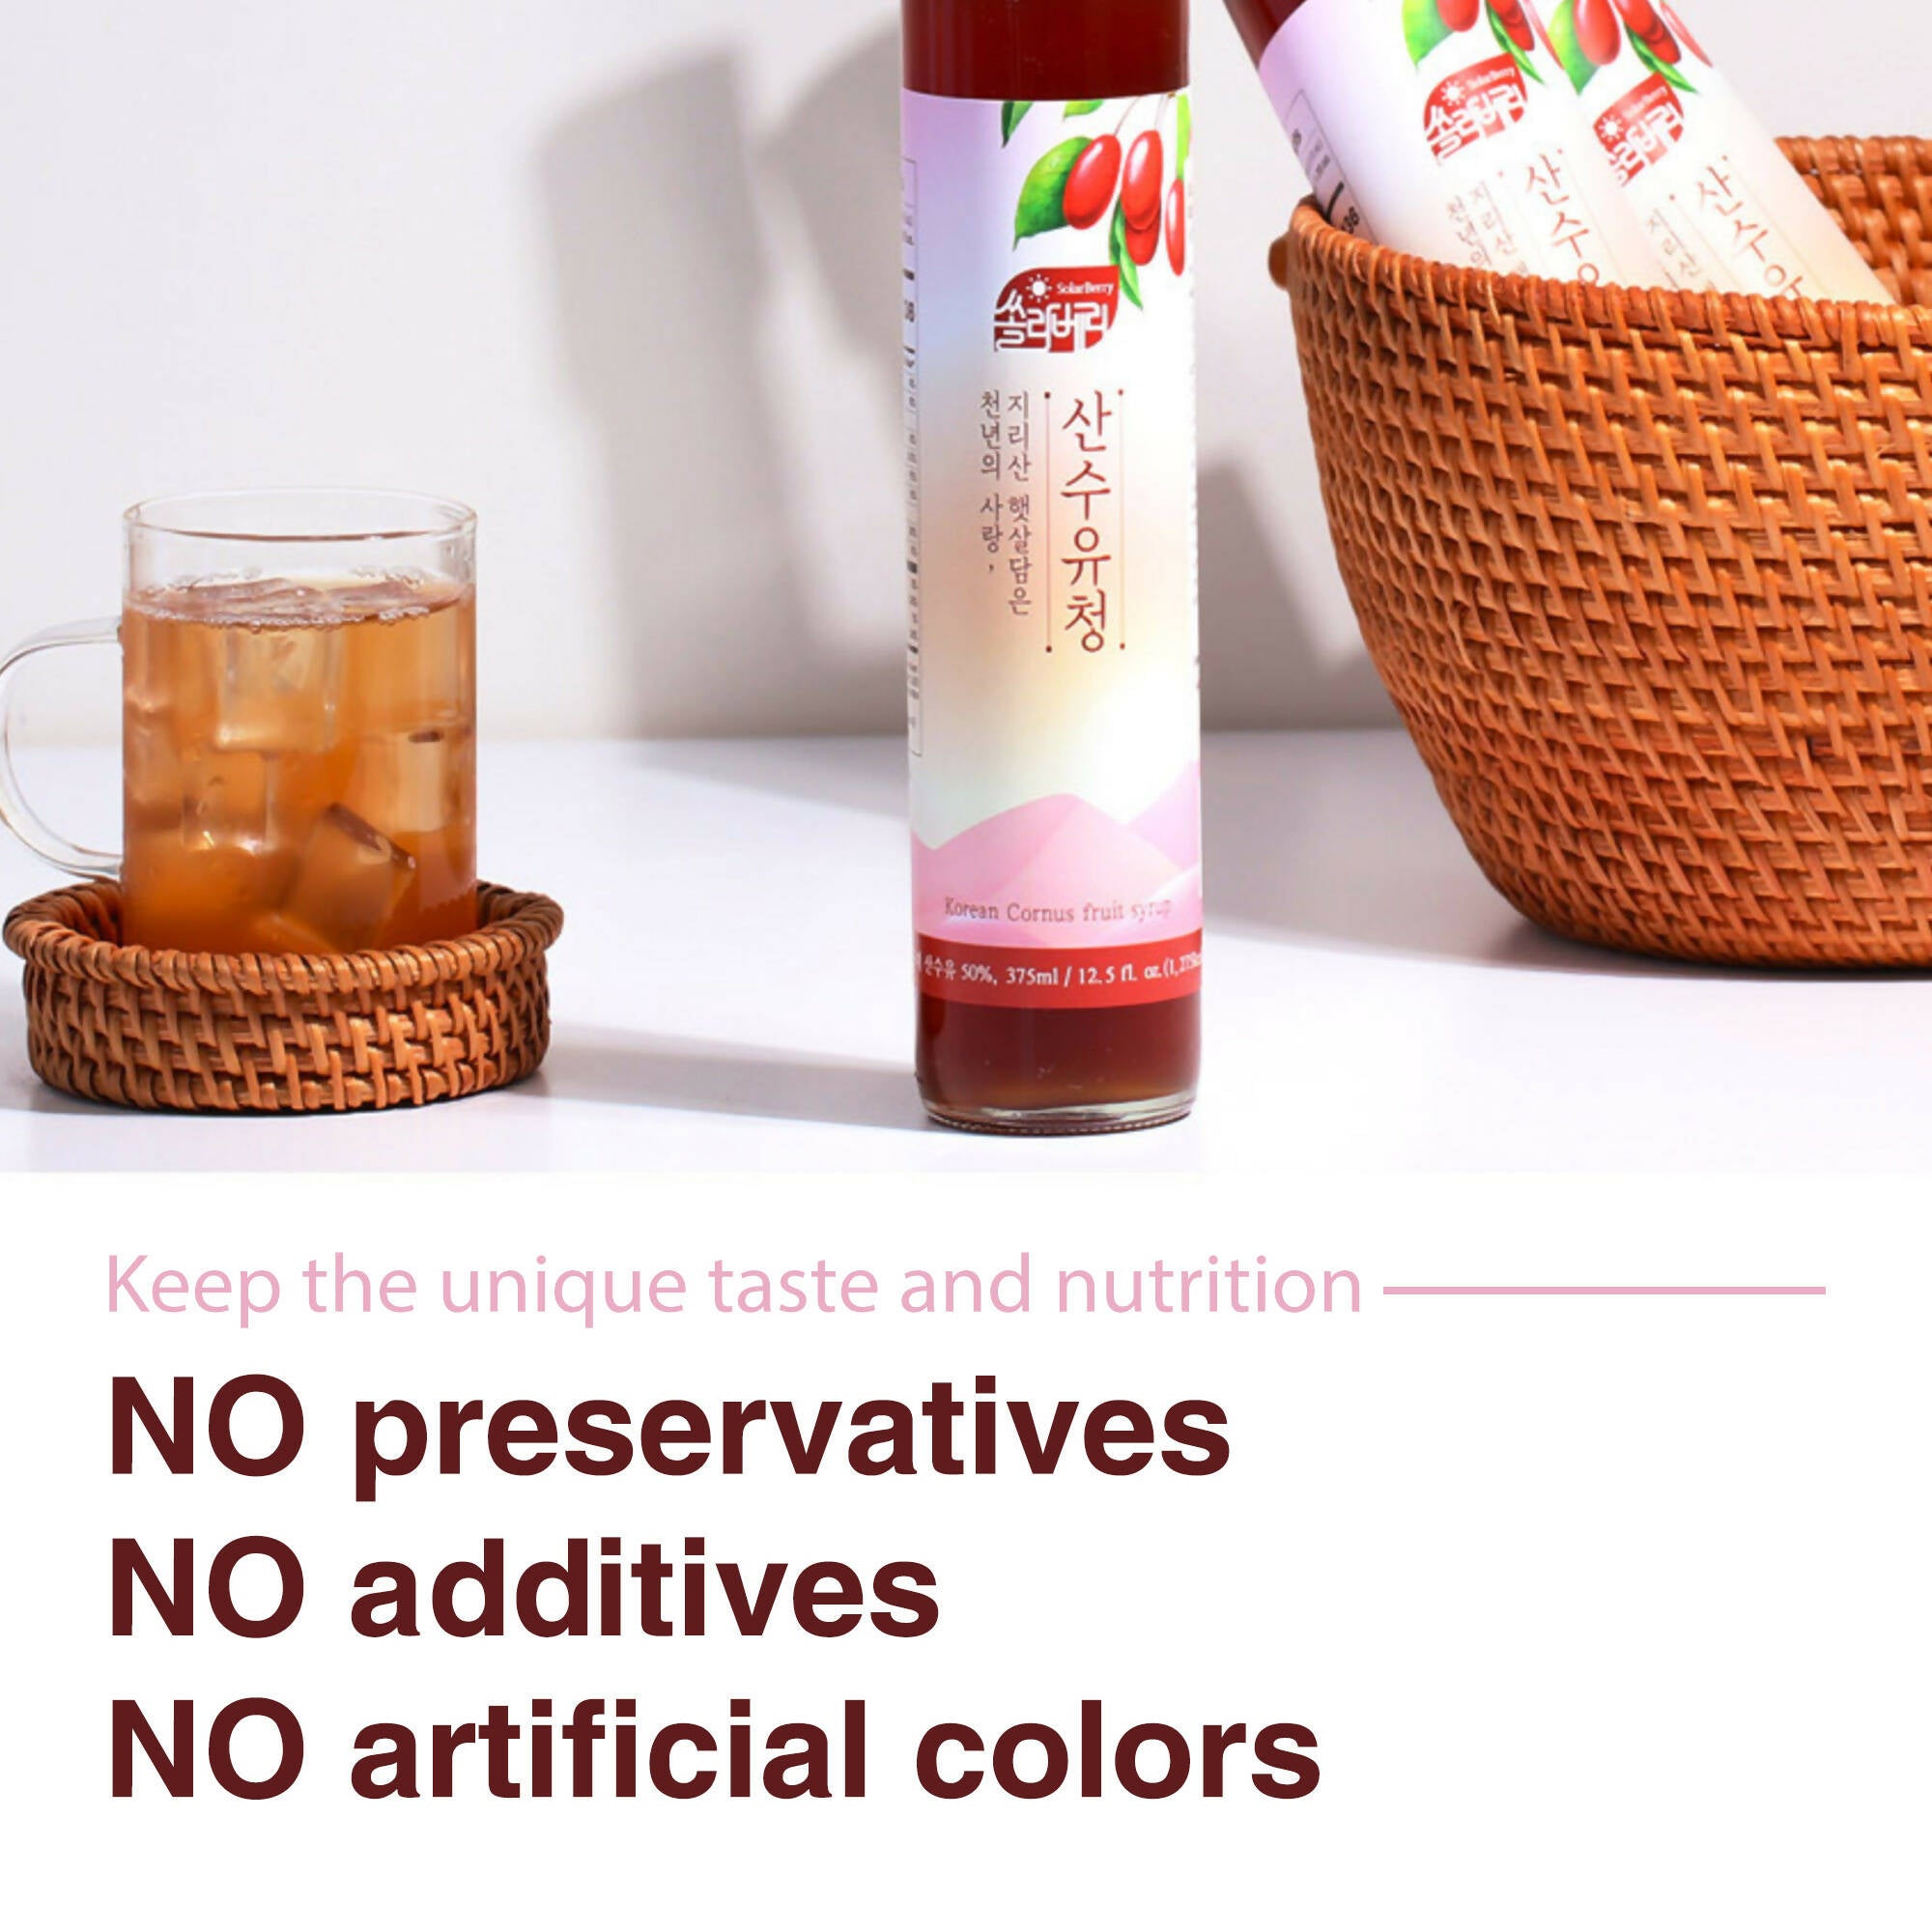 SOLAR BERRY Korean Cornus Fruit Syrup - [쏠라베리] 우리가족 건강음표 산수유청 선물용 375ml